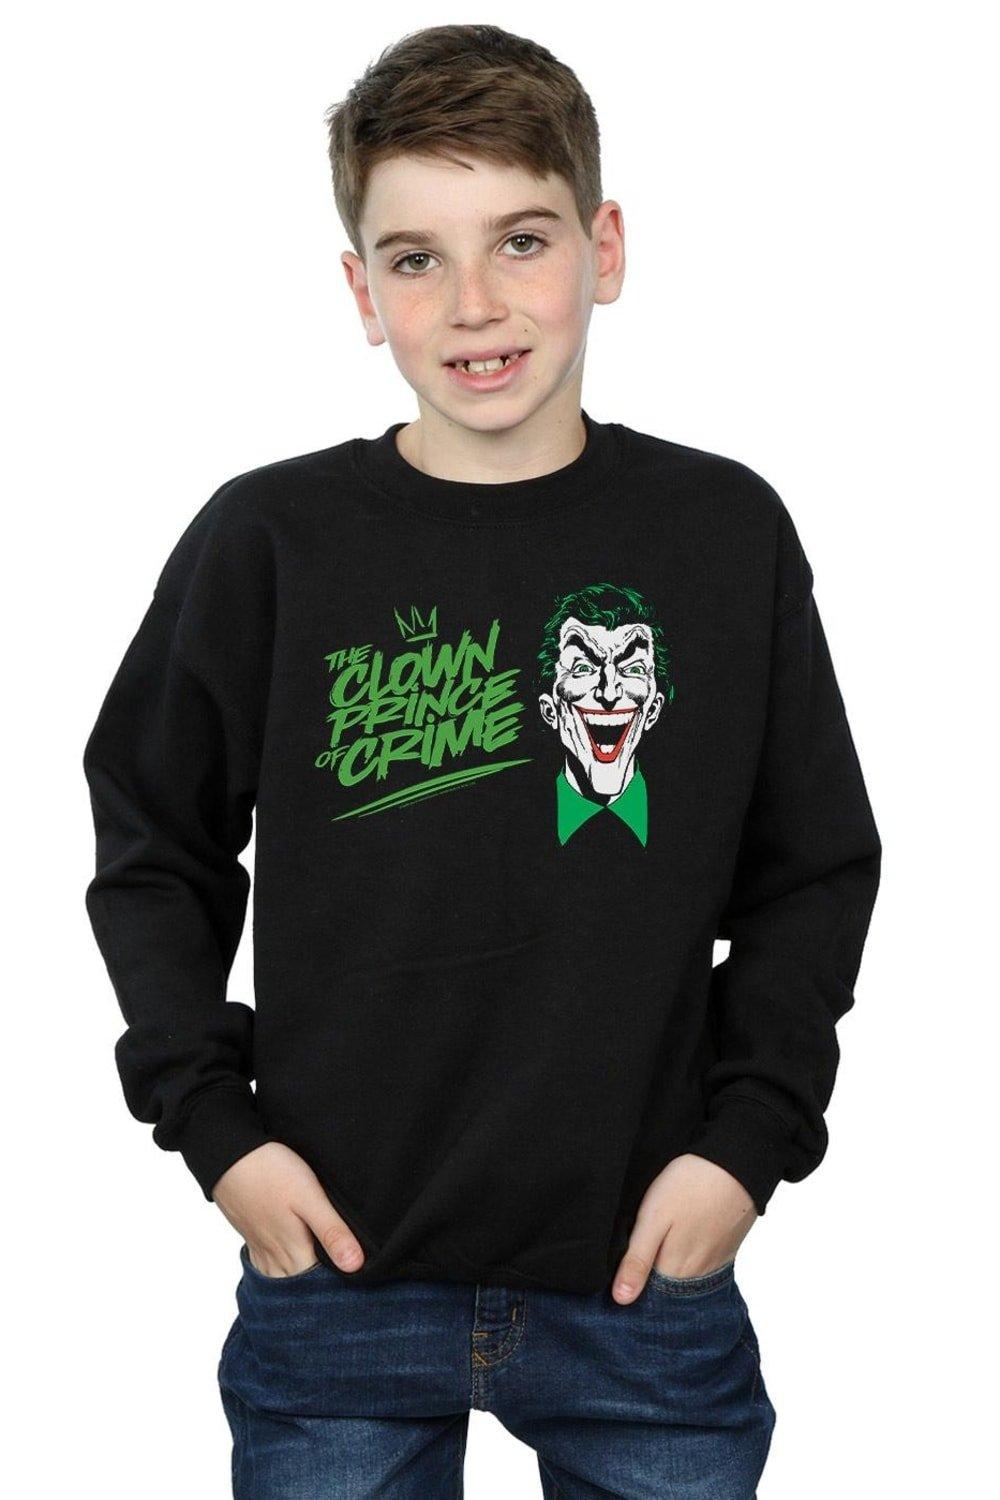 Batman Joker The Clown Prince Of Crime Sweatshirt